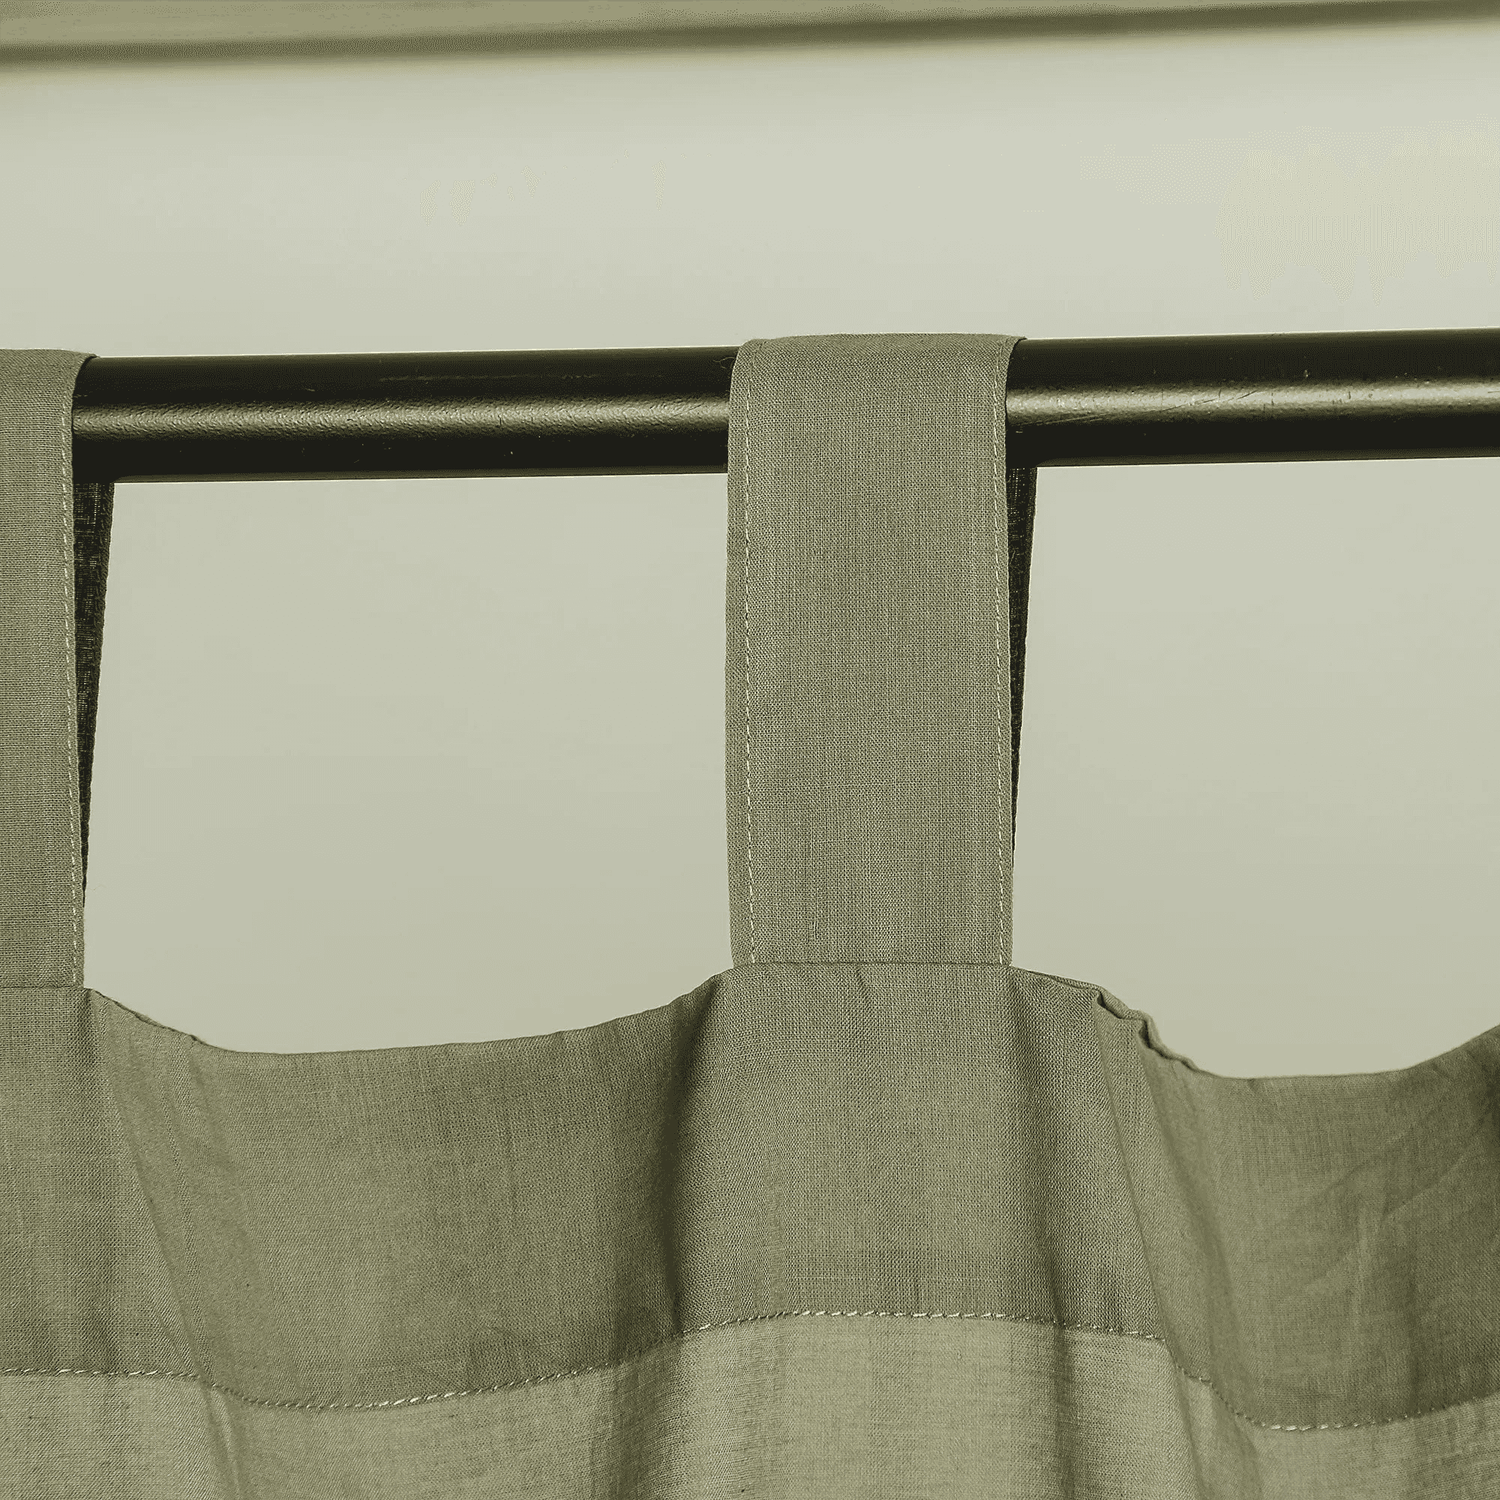 Olive Oasis Cotton Curtain Set